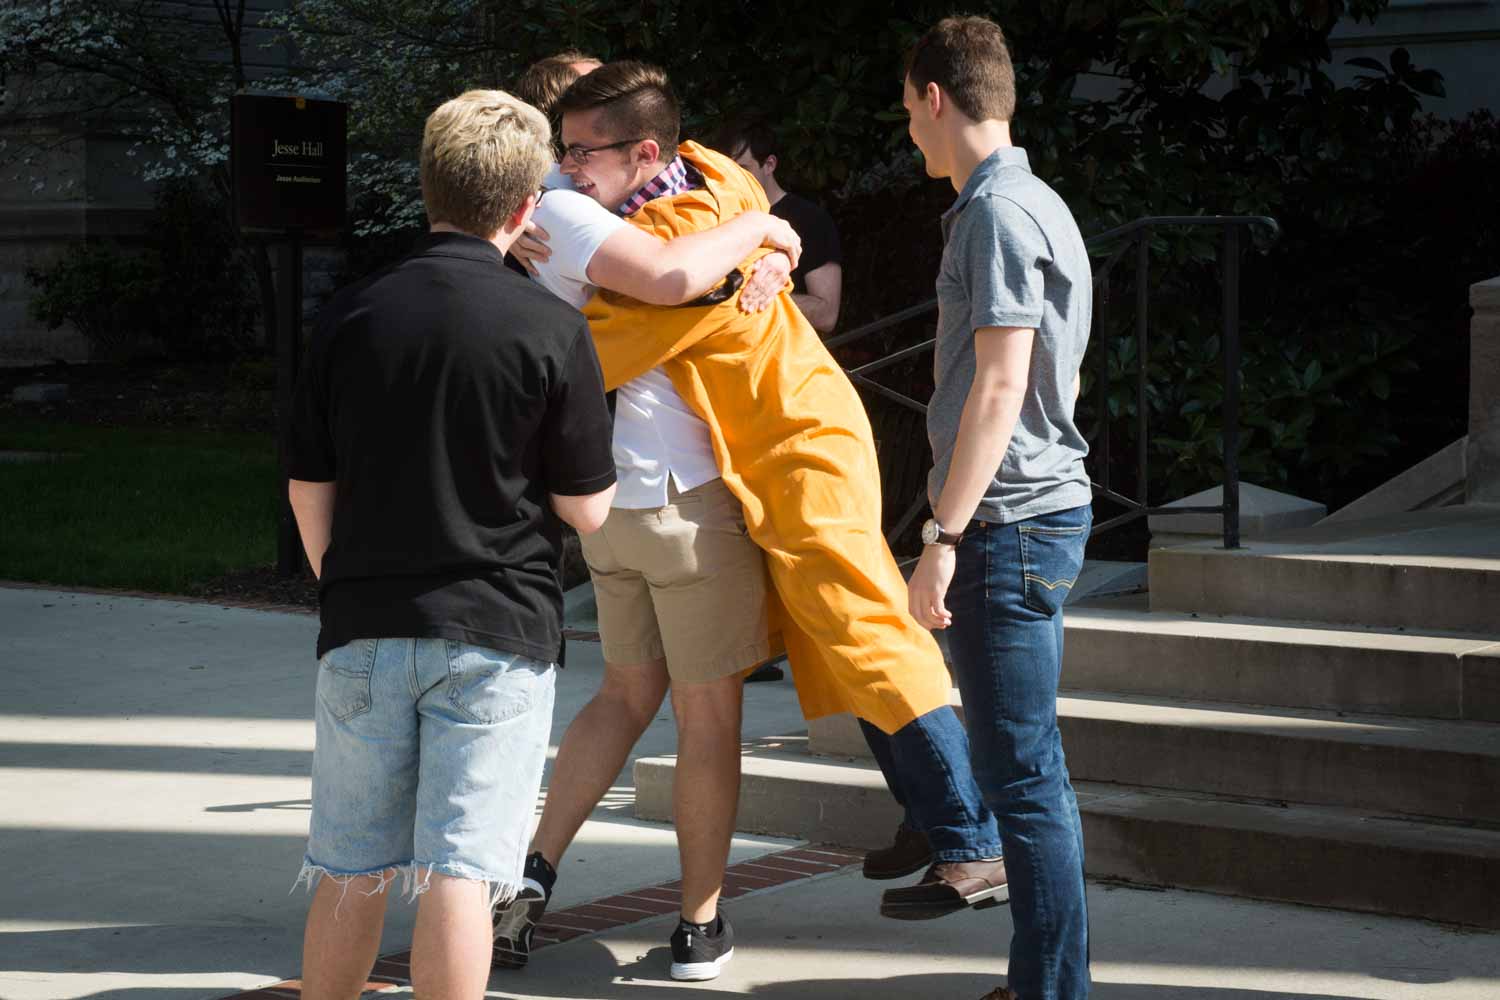 Jake Boeding receives a celebratory hug from a friend after leaving Jesse Hall.